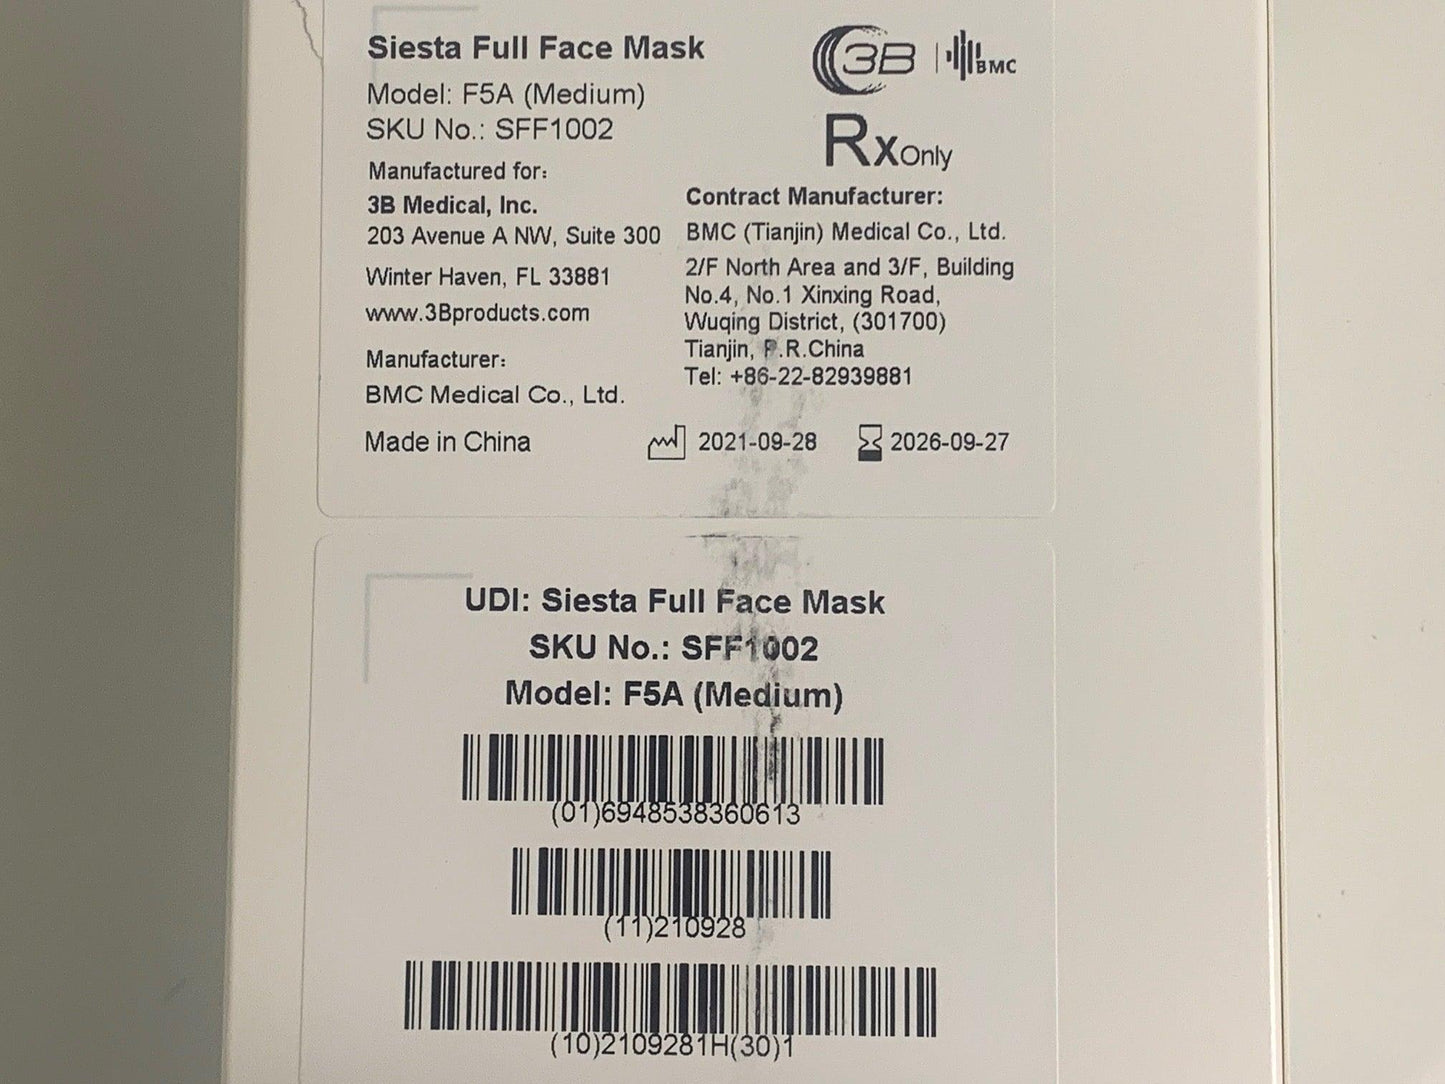 NEW 3B Medical Siesta Model F5A Medium Full Face Mask with Headgear SFF1002 - MBR Medicals